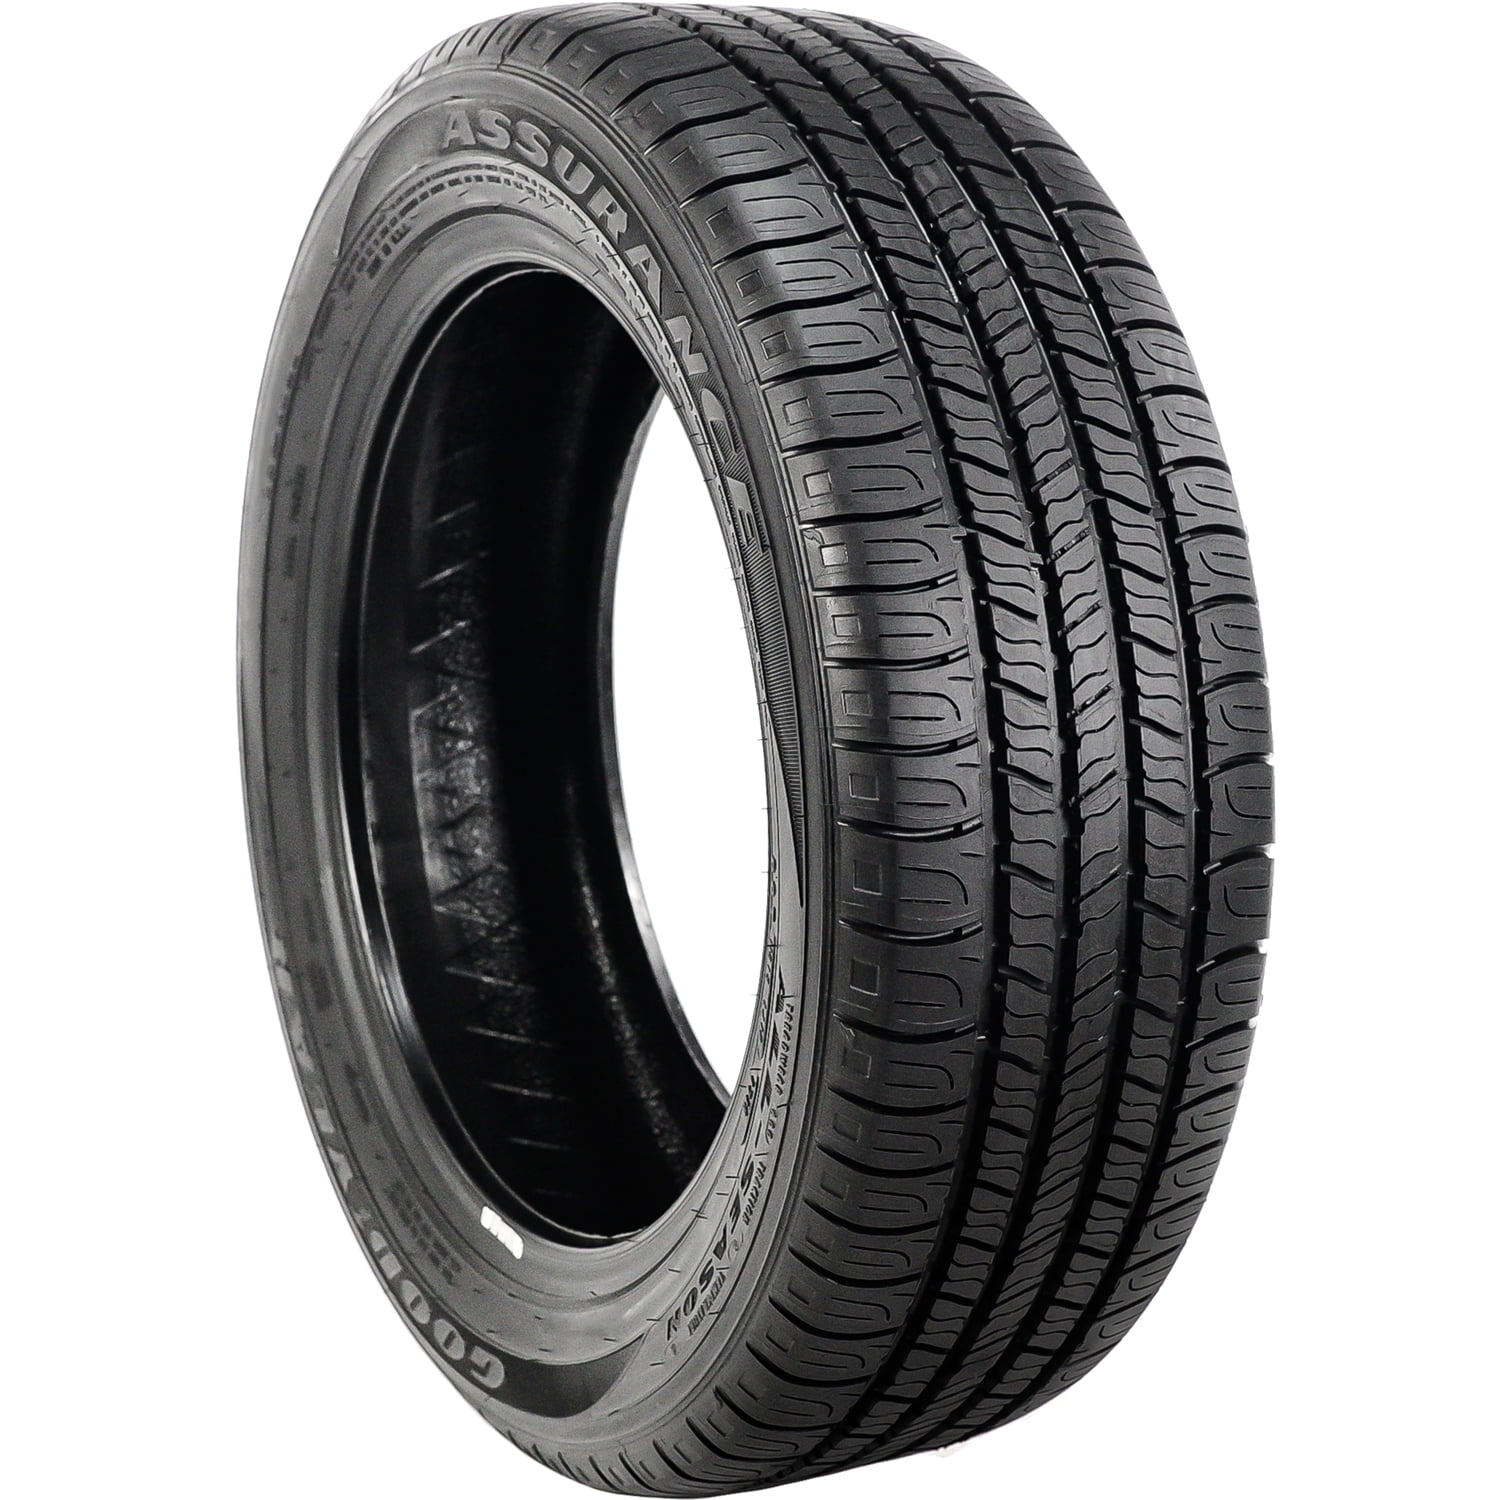 215/55R17 94H Goodyear Assurance All-Season Radial Tire 